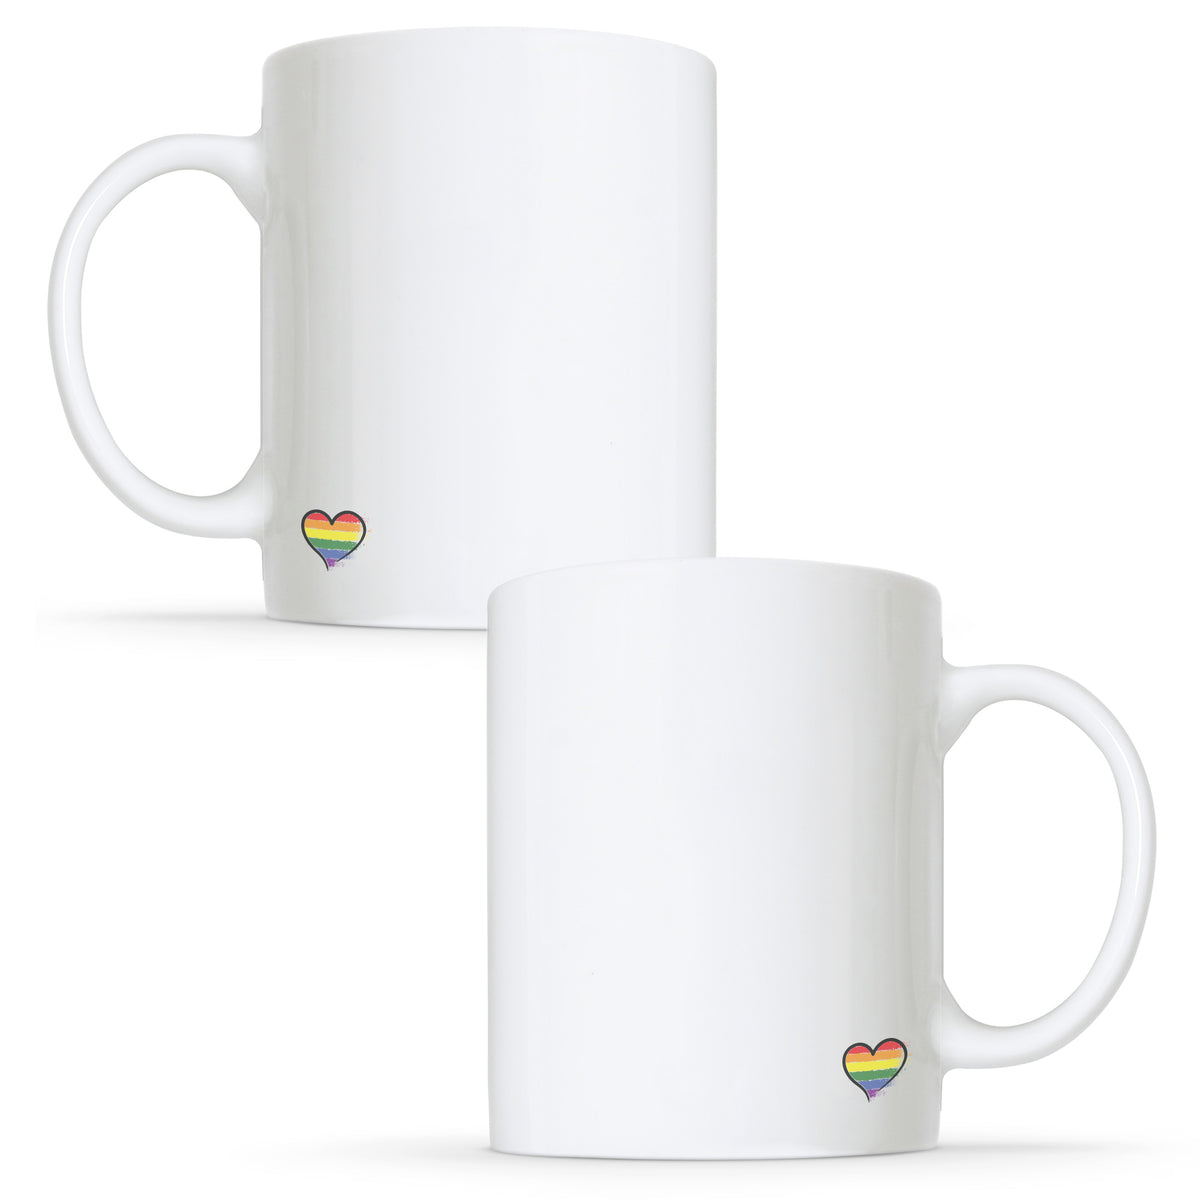 Mrs Right &amp; Mrs Always Right - Gay Lesbian Couple Mug Set | Gift